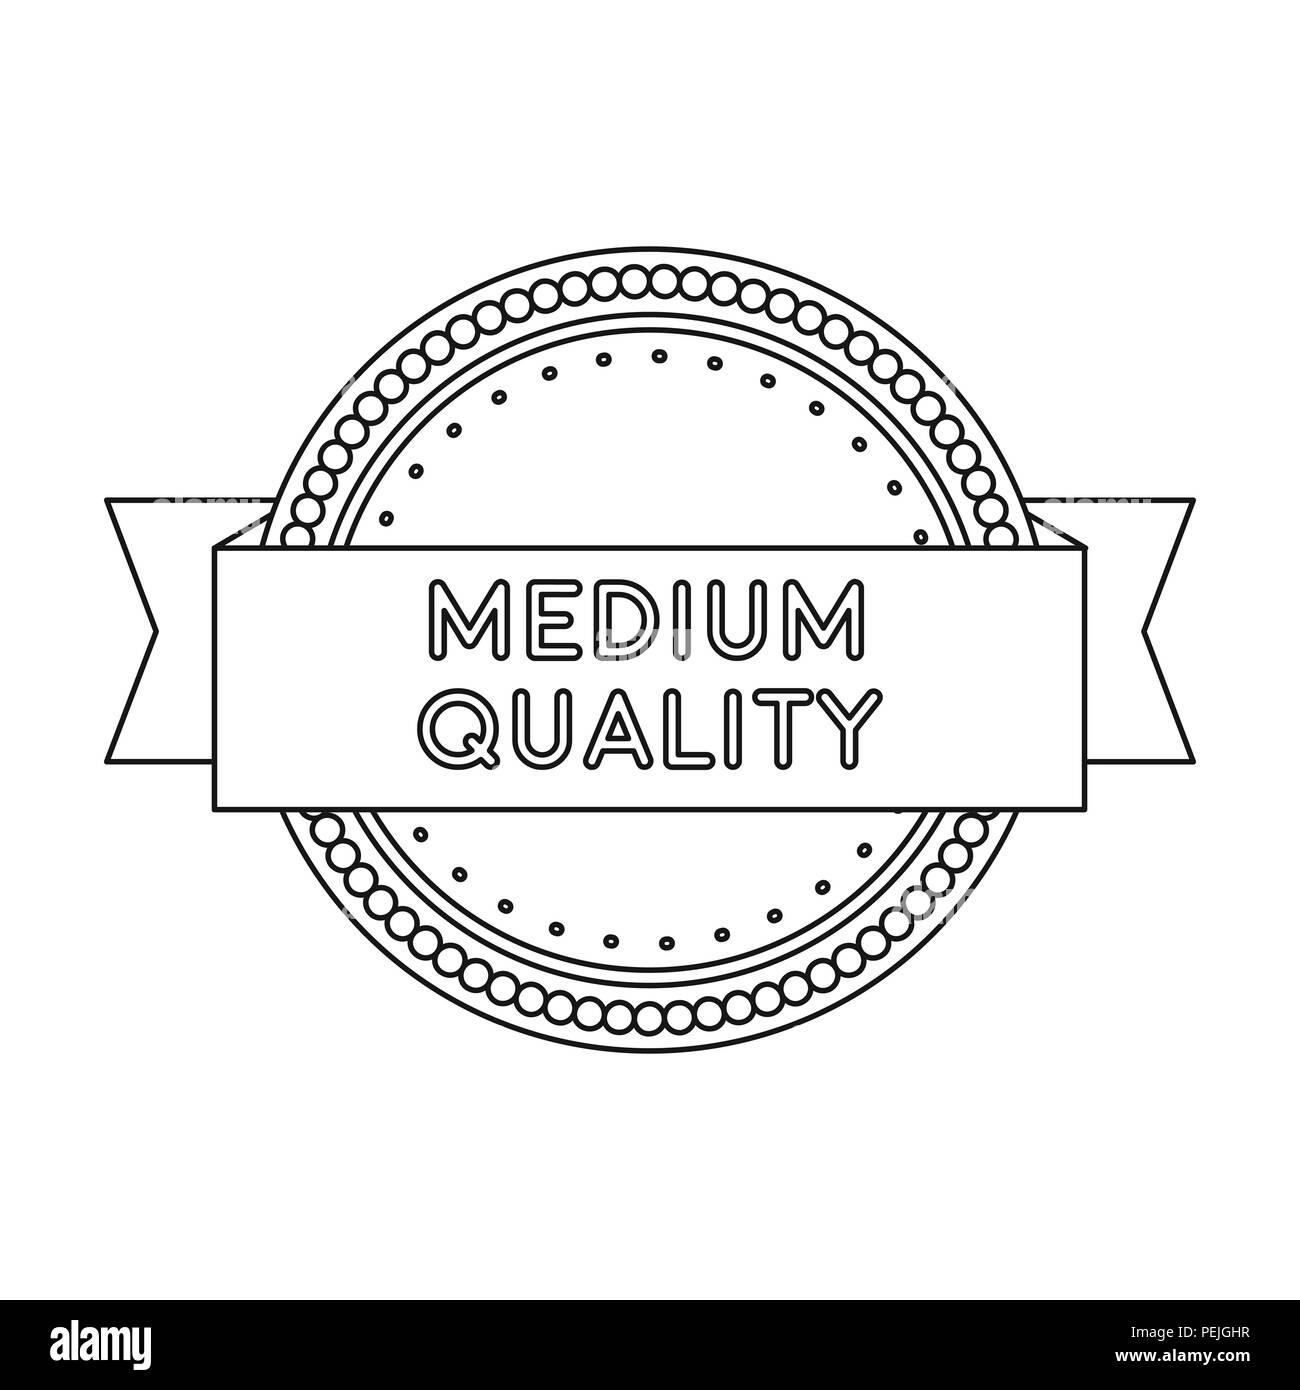 Quality production. Медиум Кволити. Medium quality. Медиум Кволити продакшн. Medium quality Production логотип.